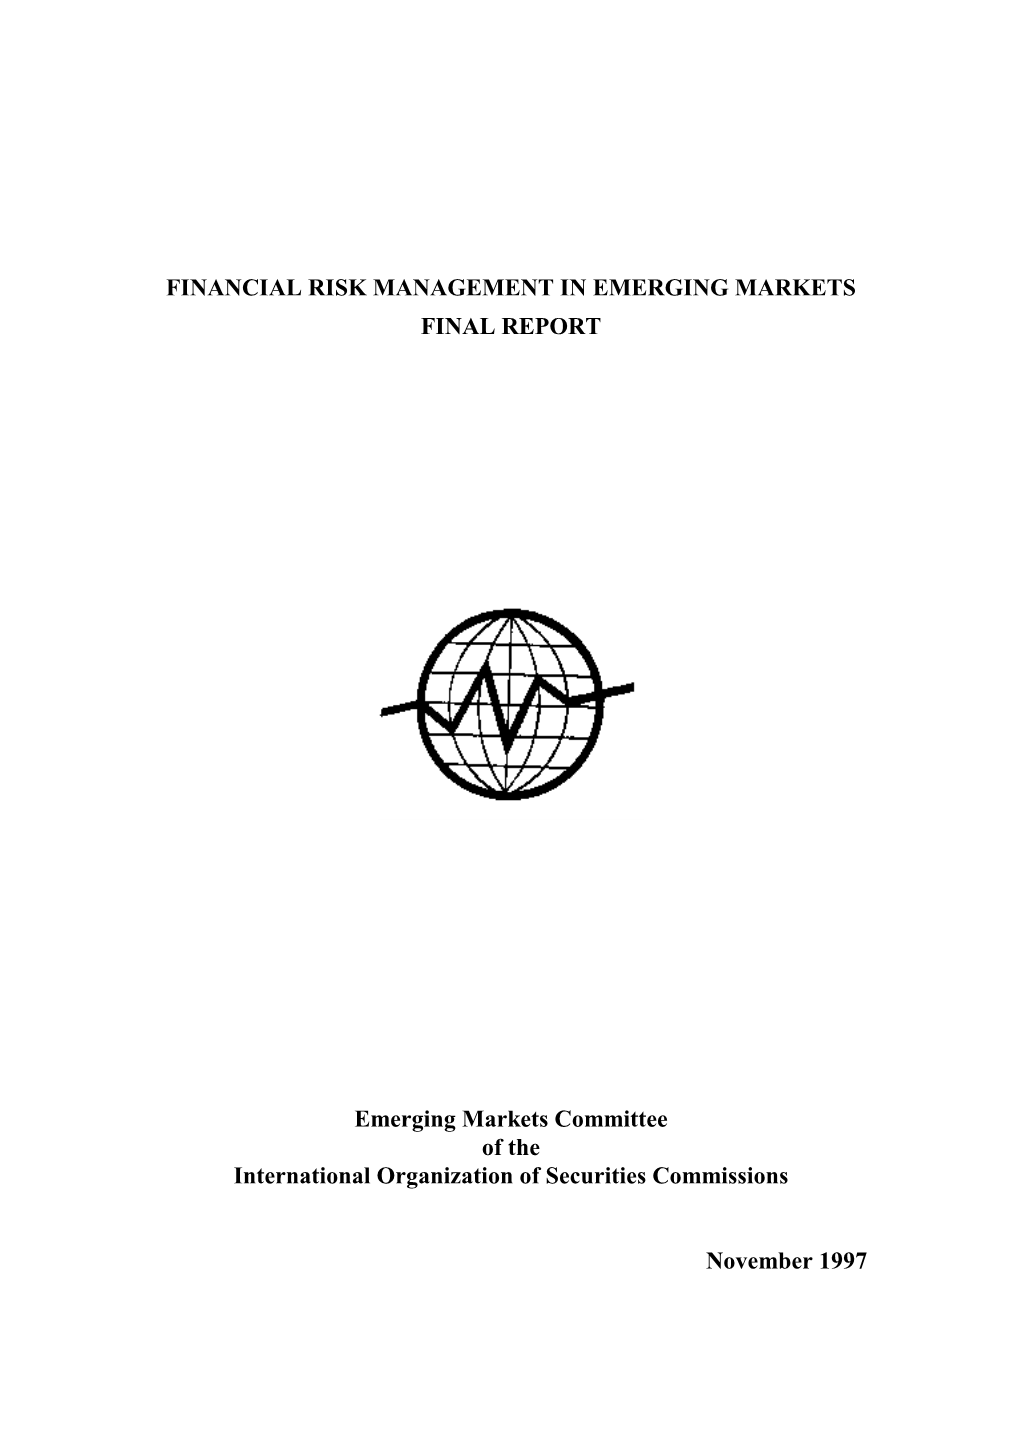 Financial Risk Management in Emerging Markets Final Report